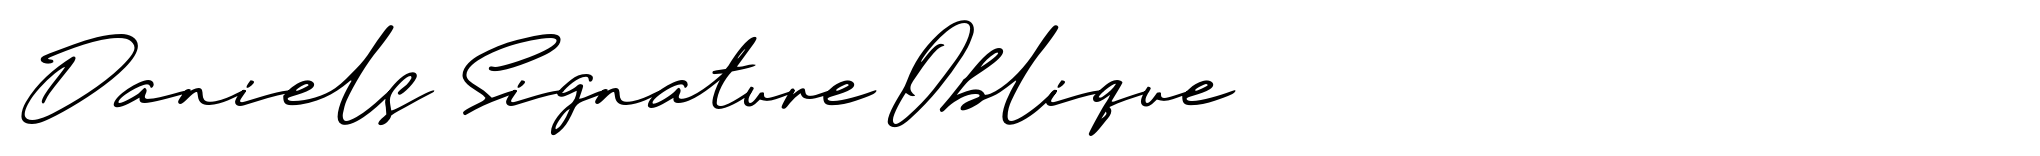 Daniels Signature Oblique image